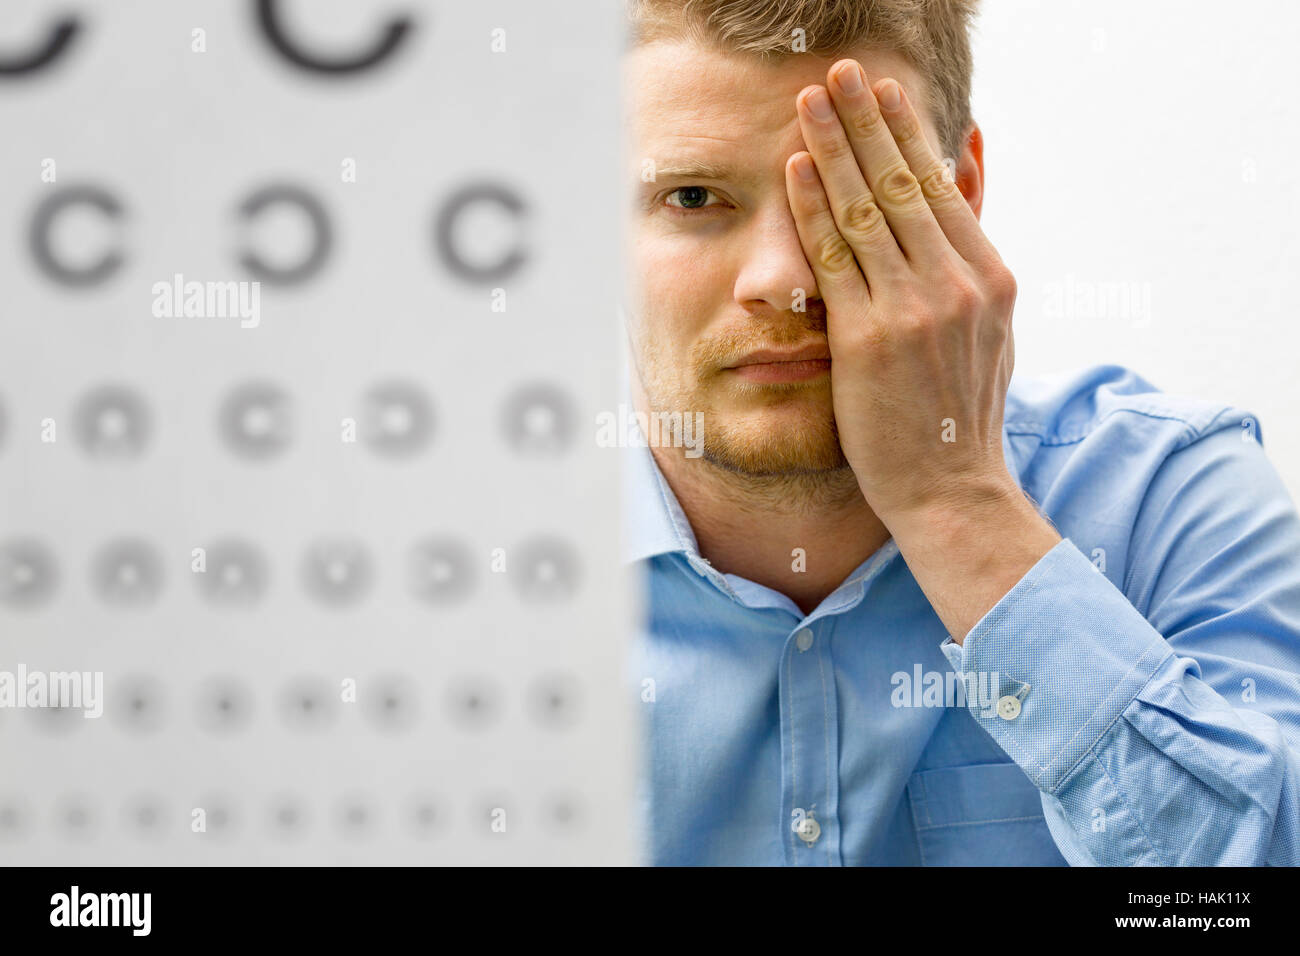 eyesight check. male patient under eye vision examination Stock Photo